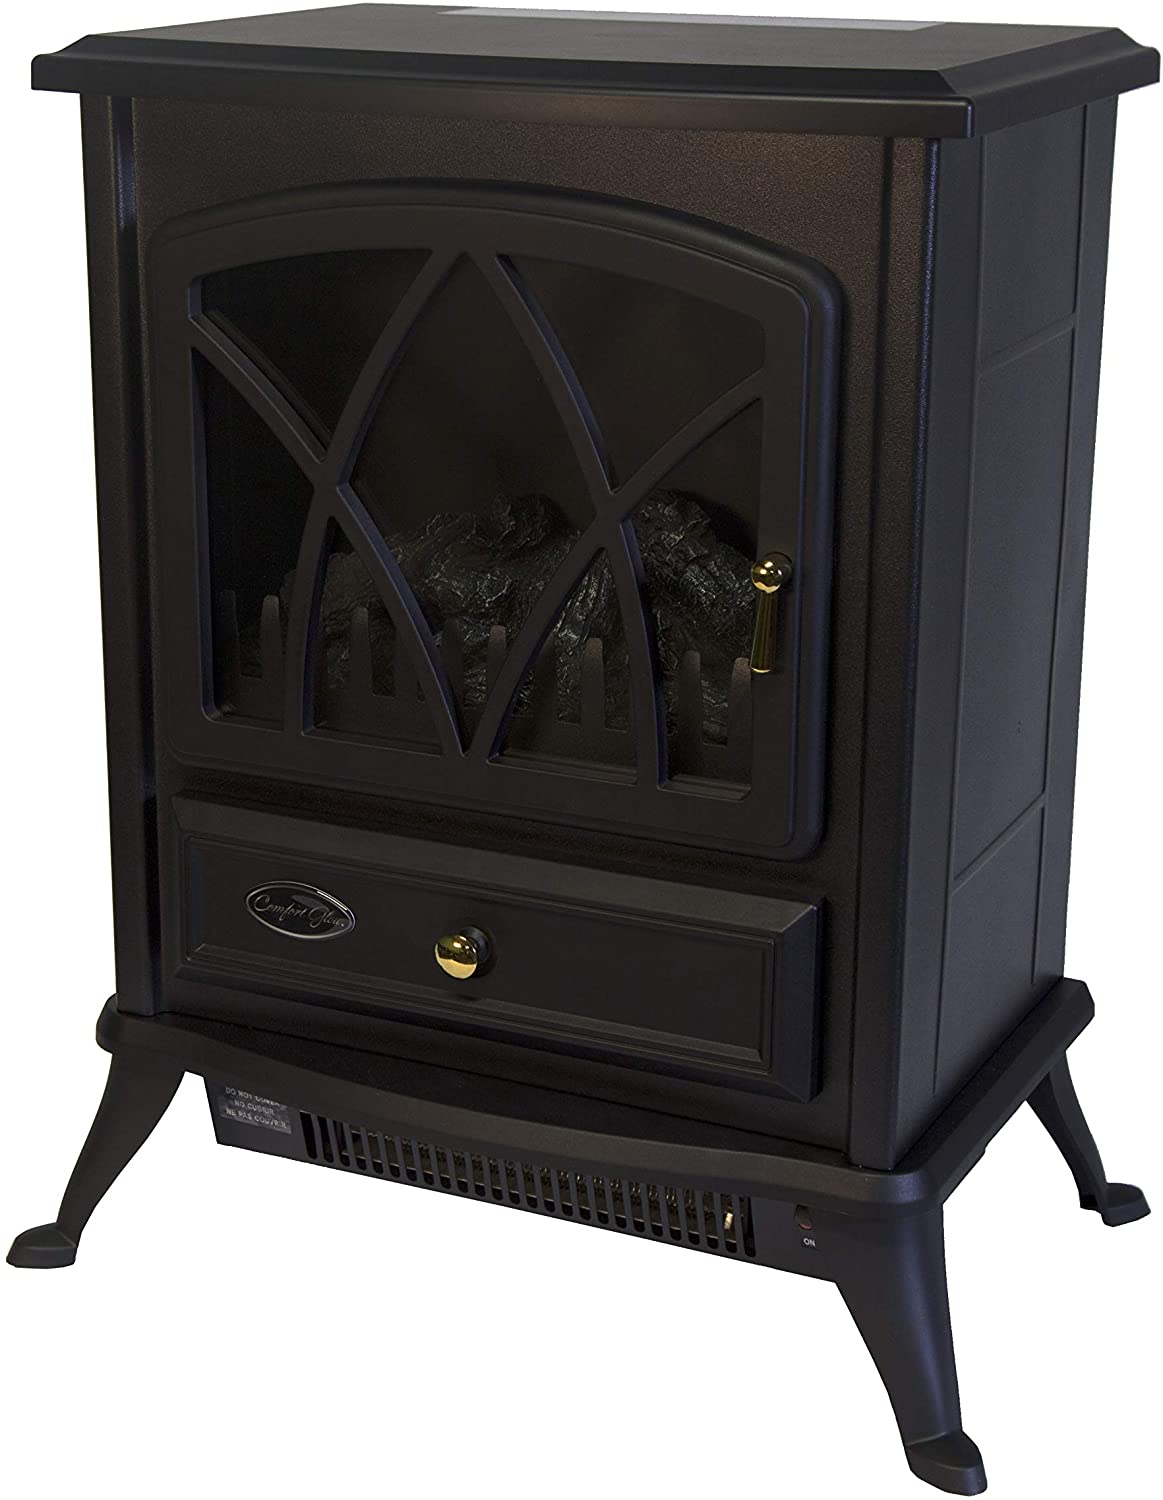 Charm Glow Electric Fireplace Inspirational fort Glow Es4215 ashton Electric Stove Black